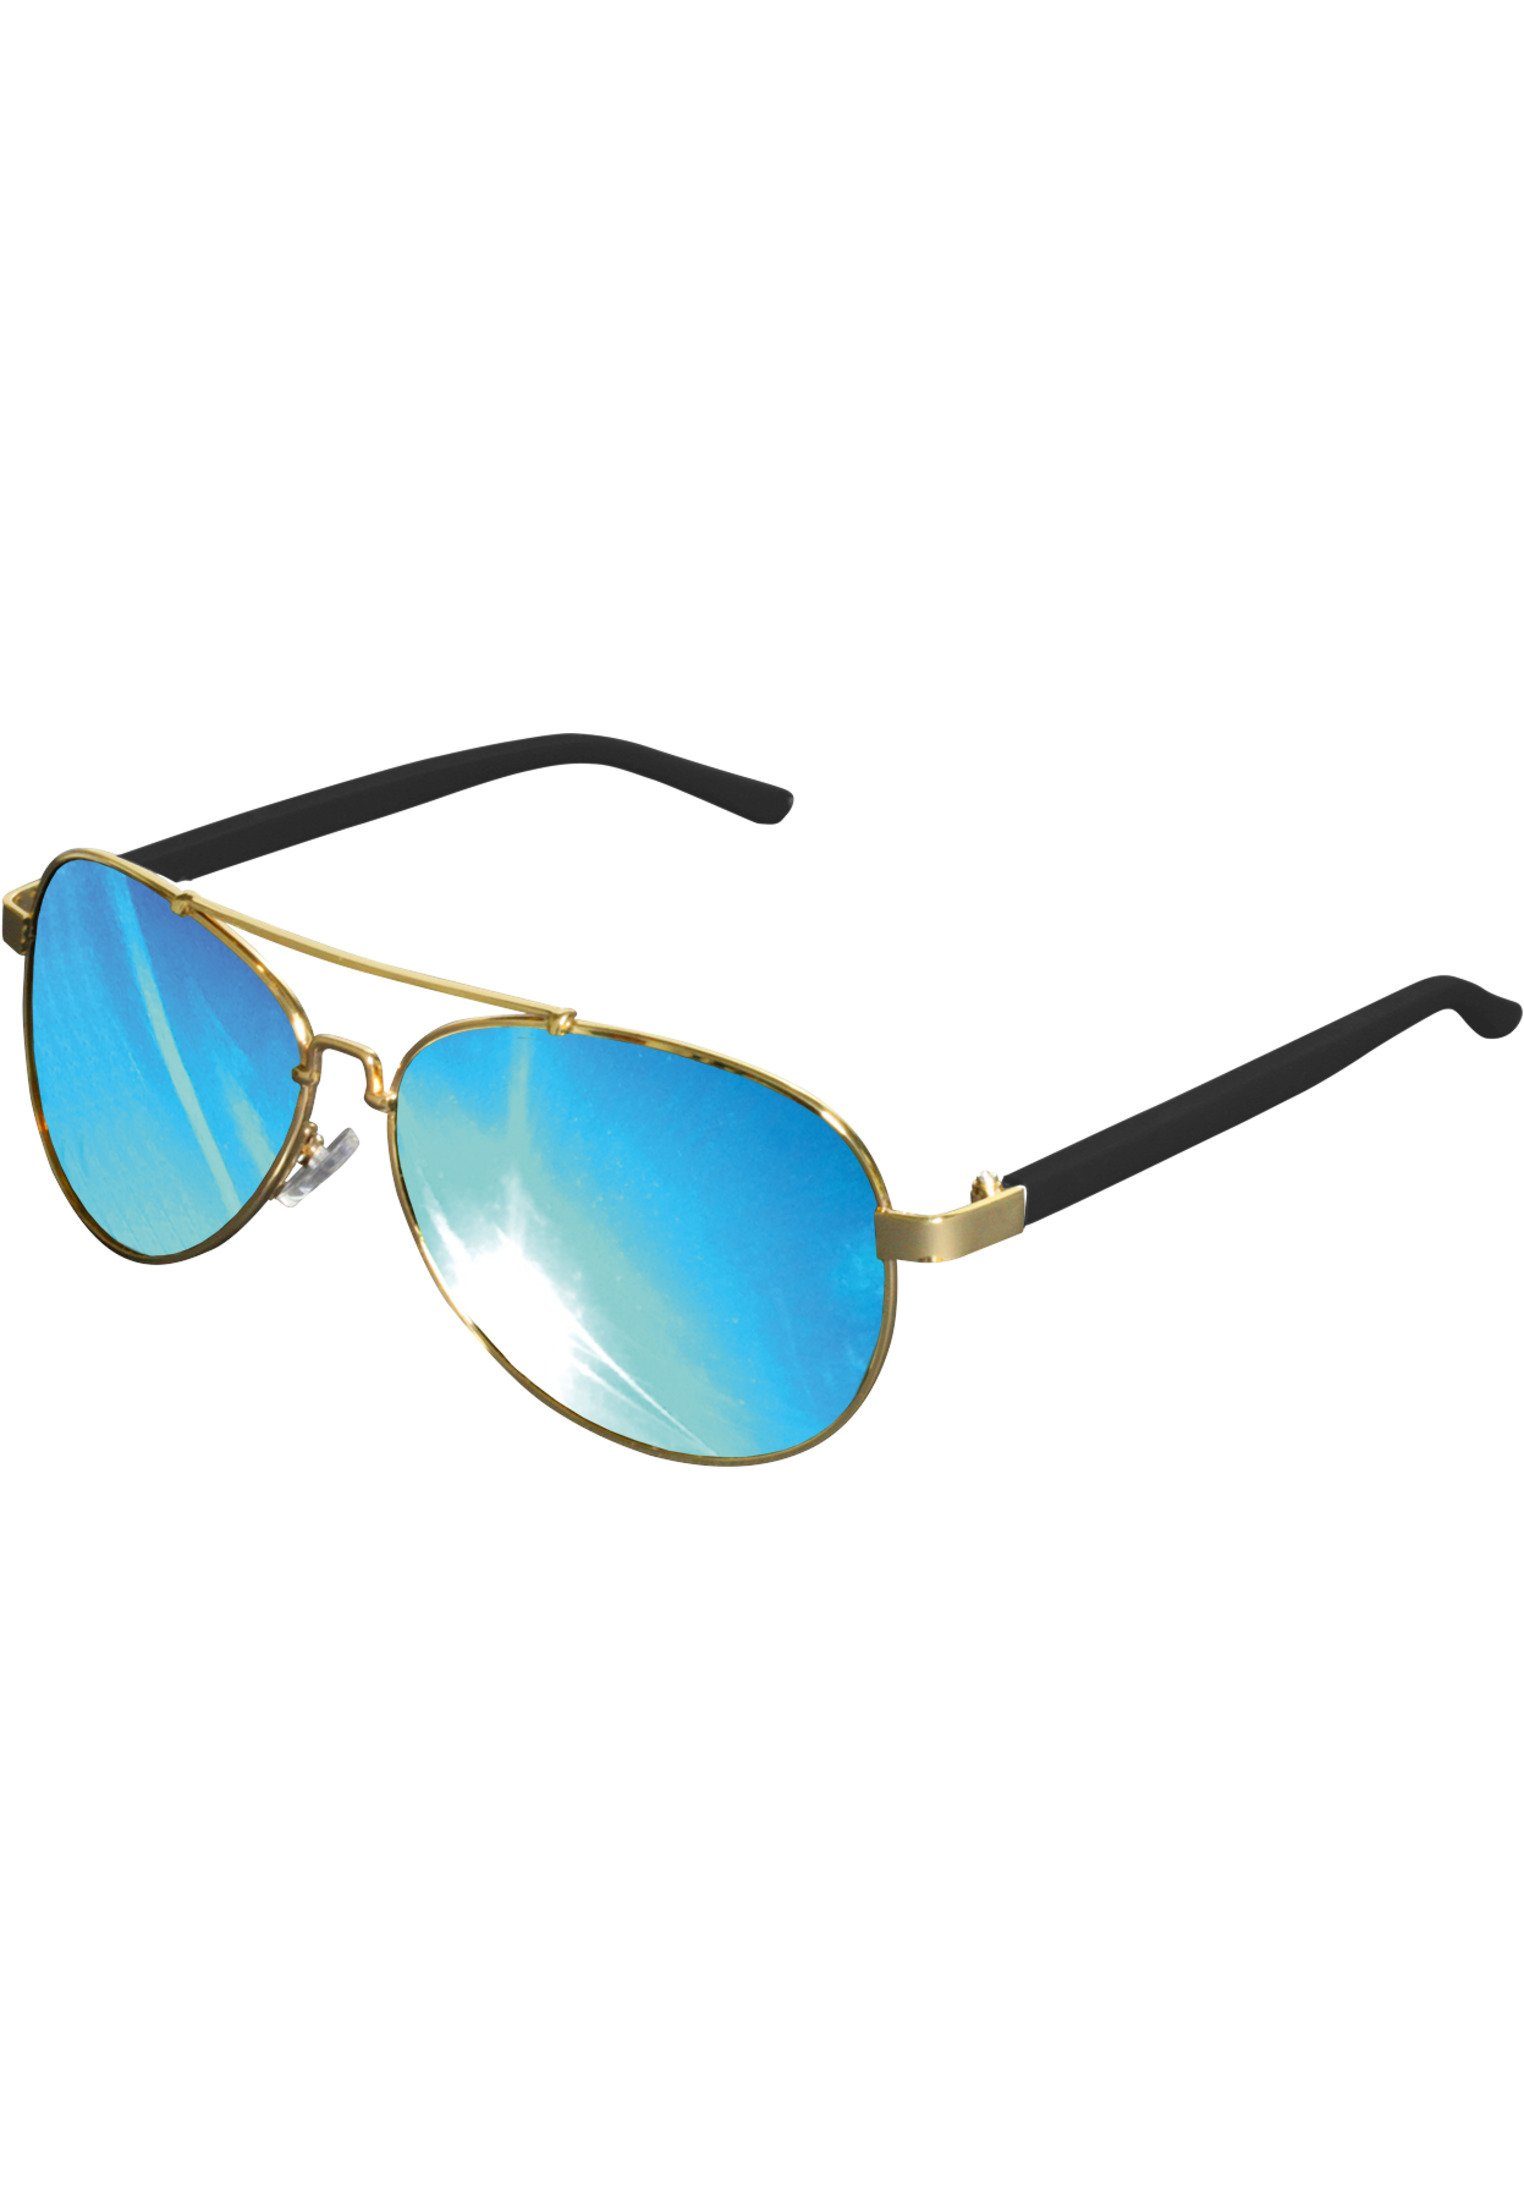 MSTRDS gold/blue Mumbo Sonnenbrille Mirror Sunglasses Accessoires